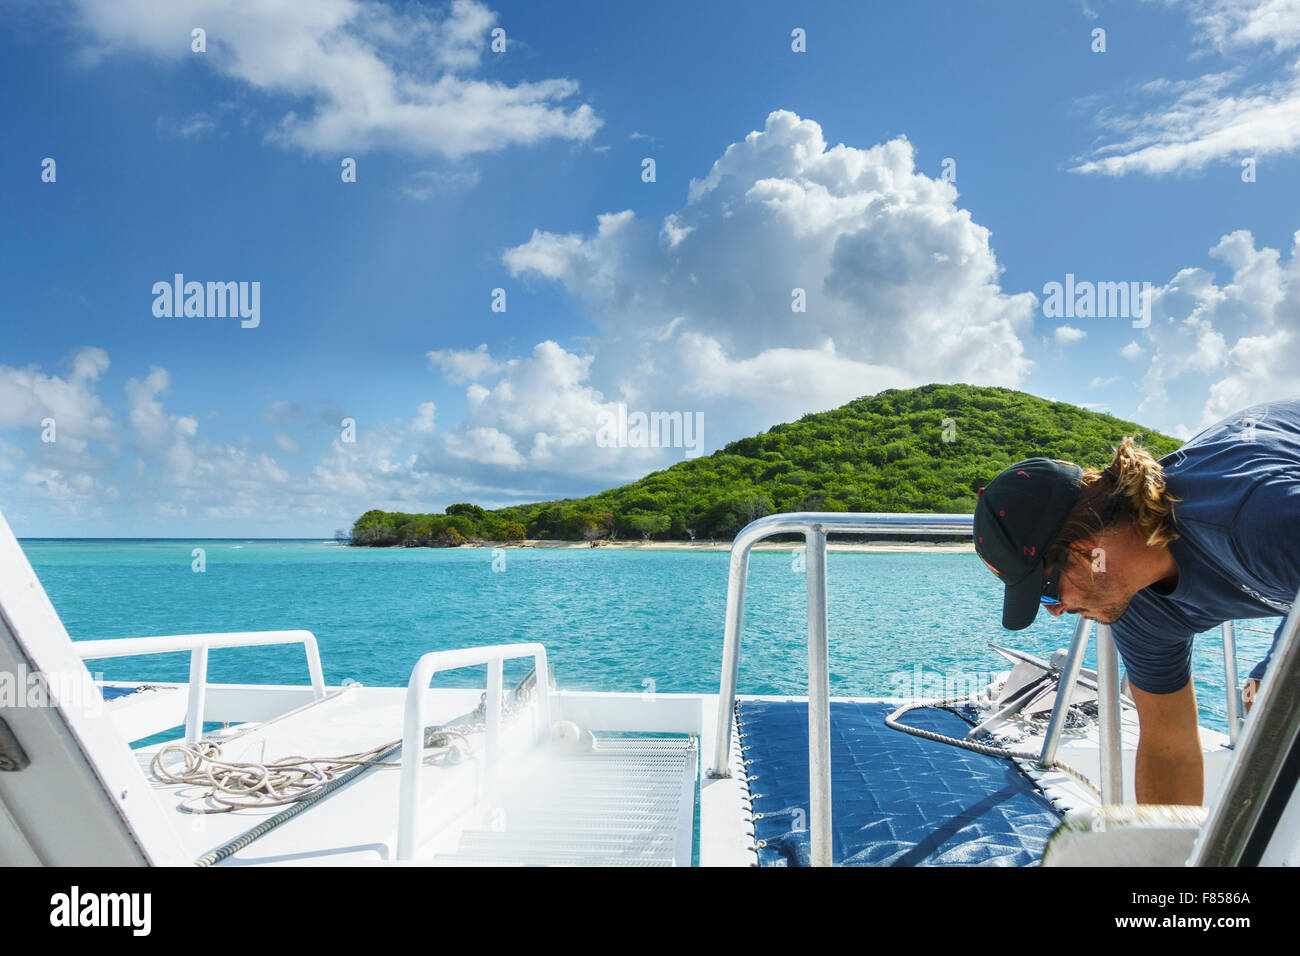 A crew member prepares to anchor a charter boat at Buck Island seen ahead in the Caribbean near St. Croix, U.S. Virgin Islands. USVI, U.S.V.I. Stock Photo